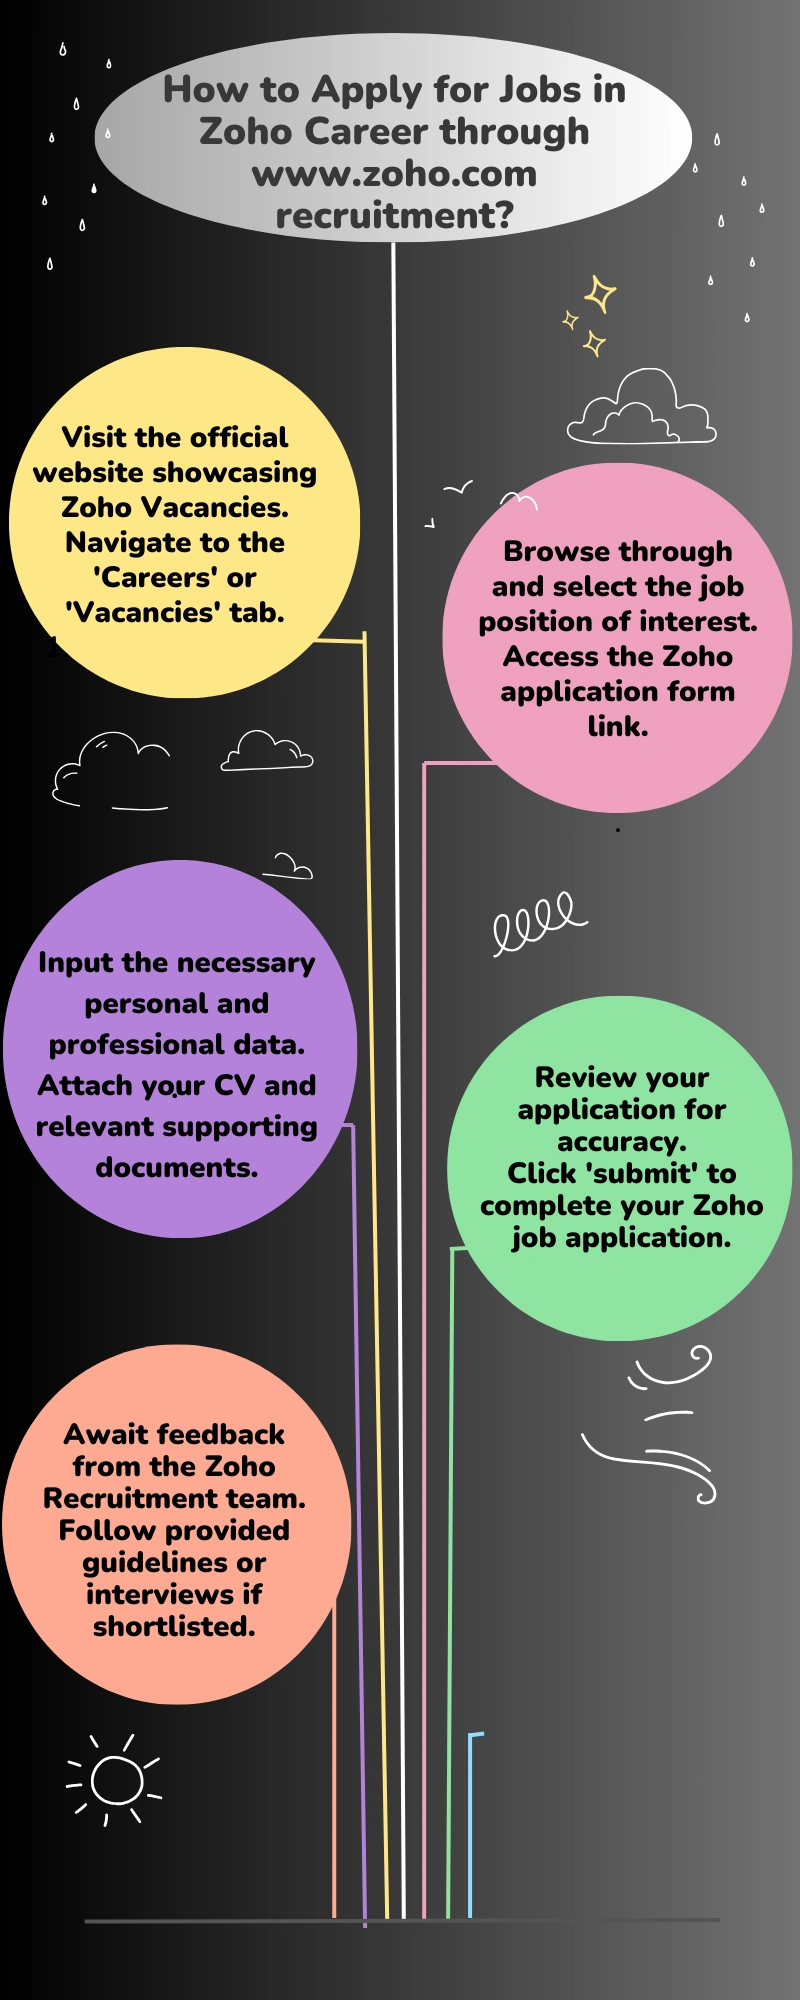 How to Apply for Jobs in Zoho Career through www.zoho.com recruitment?